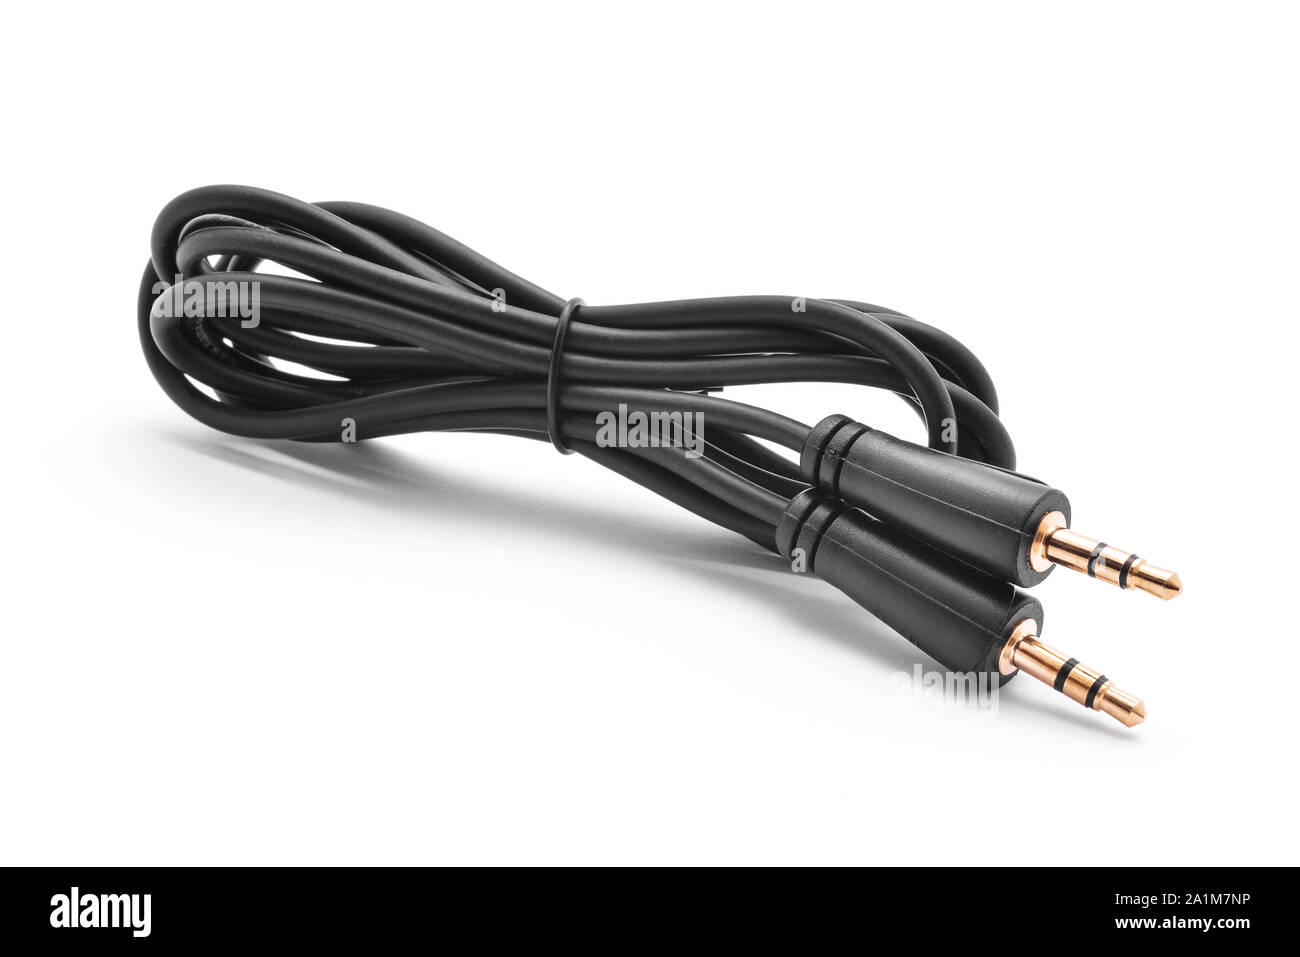 black 3.5 mm. jack audio cable on white background. Stock Photo